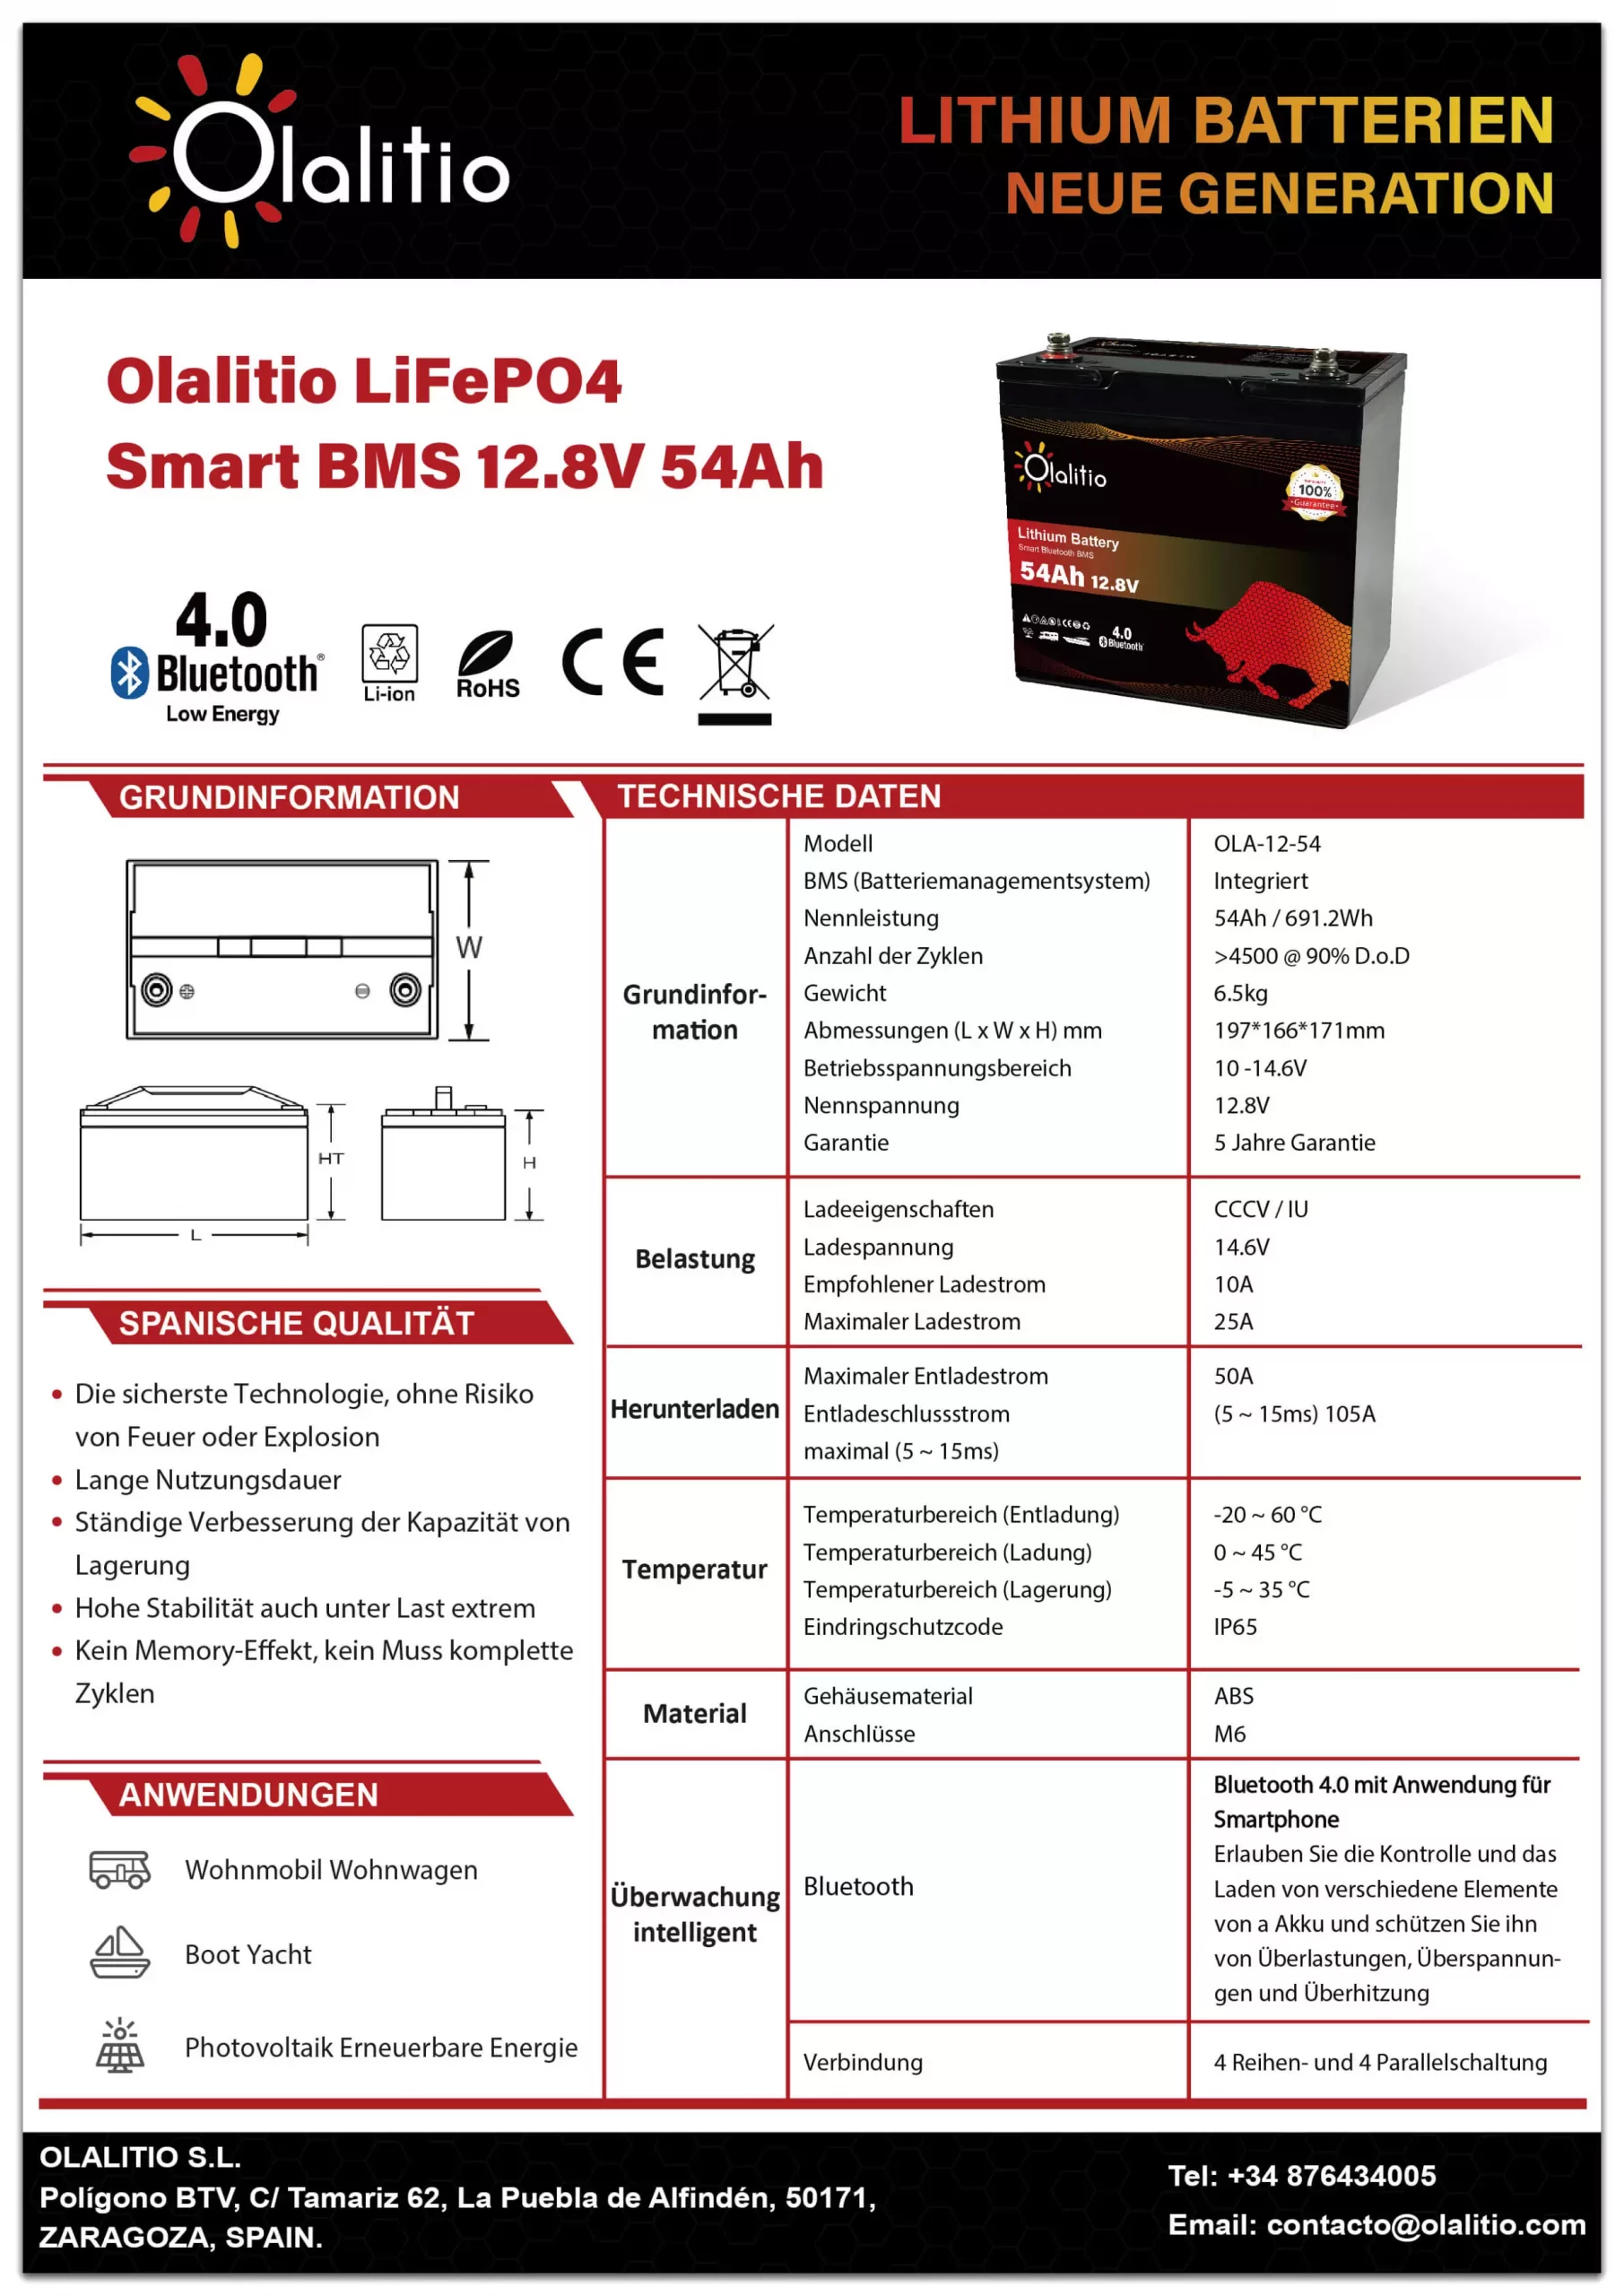 olalitio-lithium-batterie-12v-54ah-de